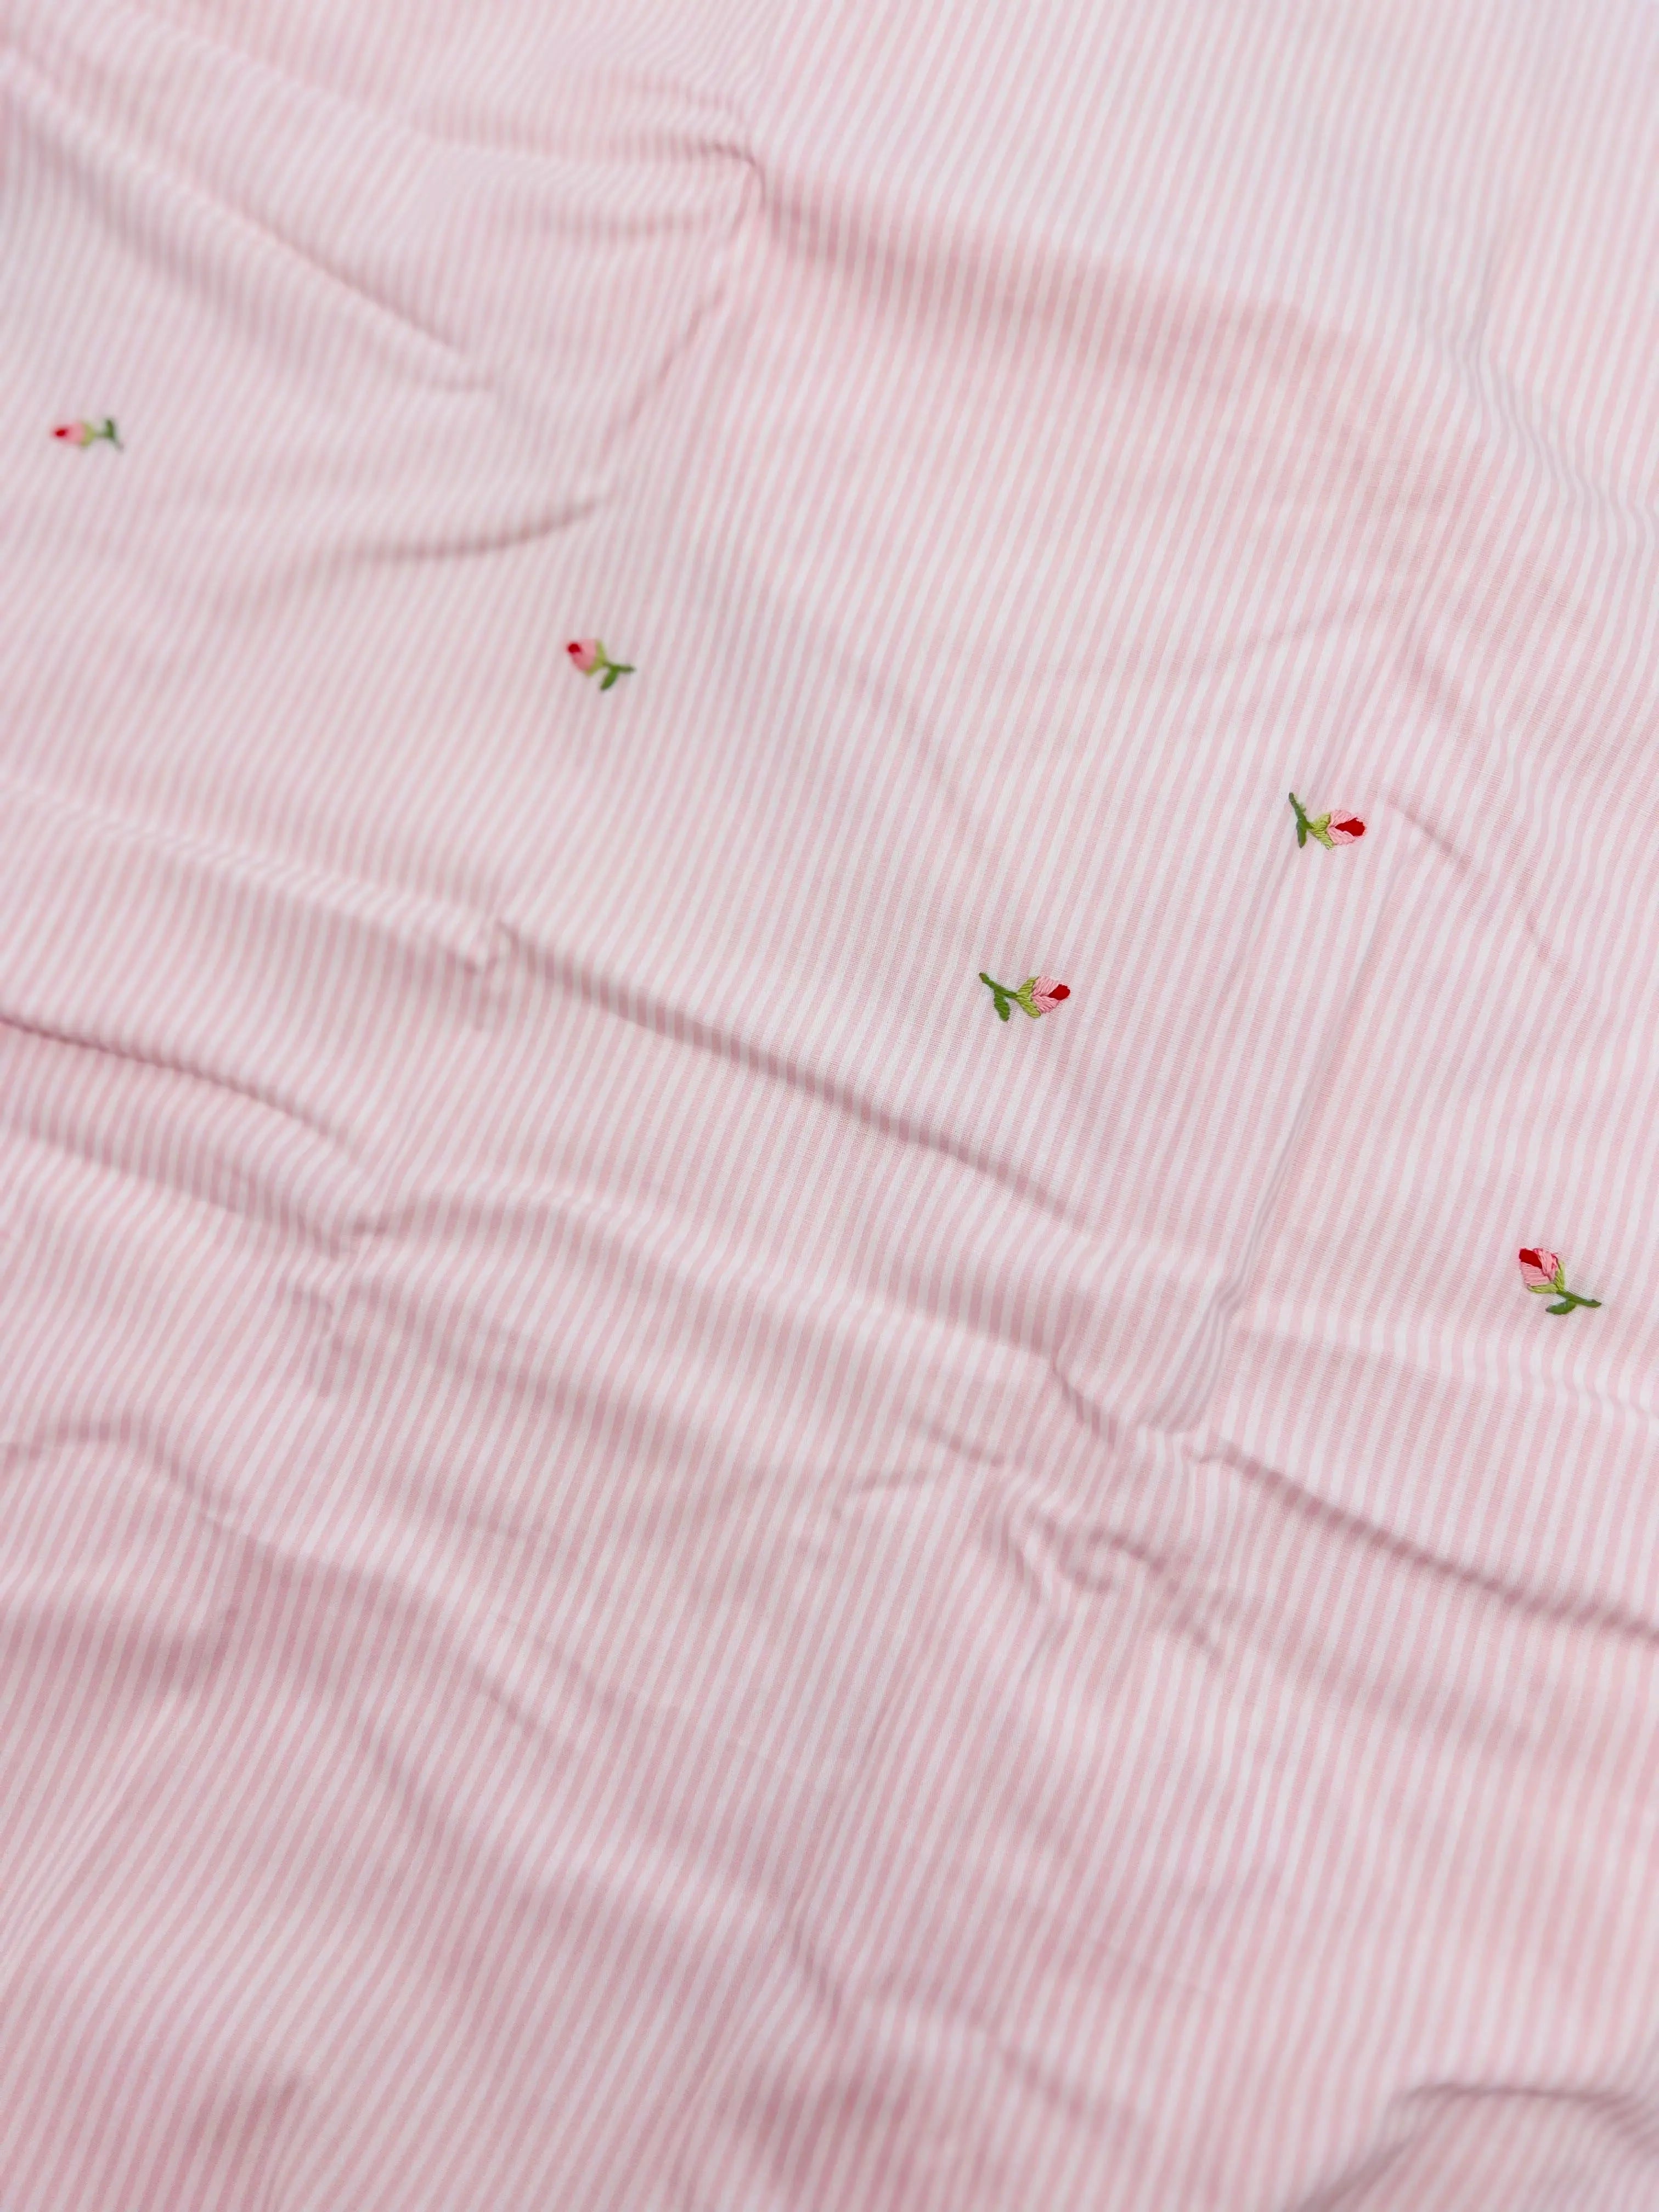 Cotbed fitted sheet "rosebuds"-Towels & bedlinen-Gordonsbury-Blue Almonds-London-South Kensington